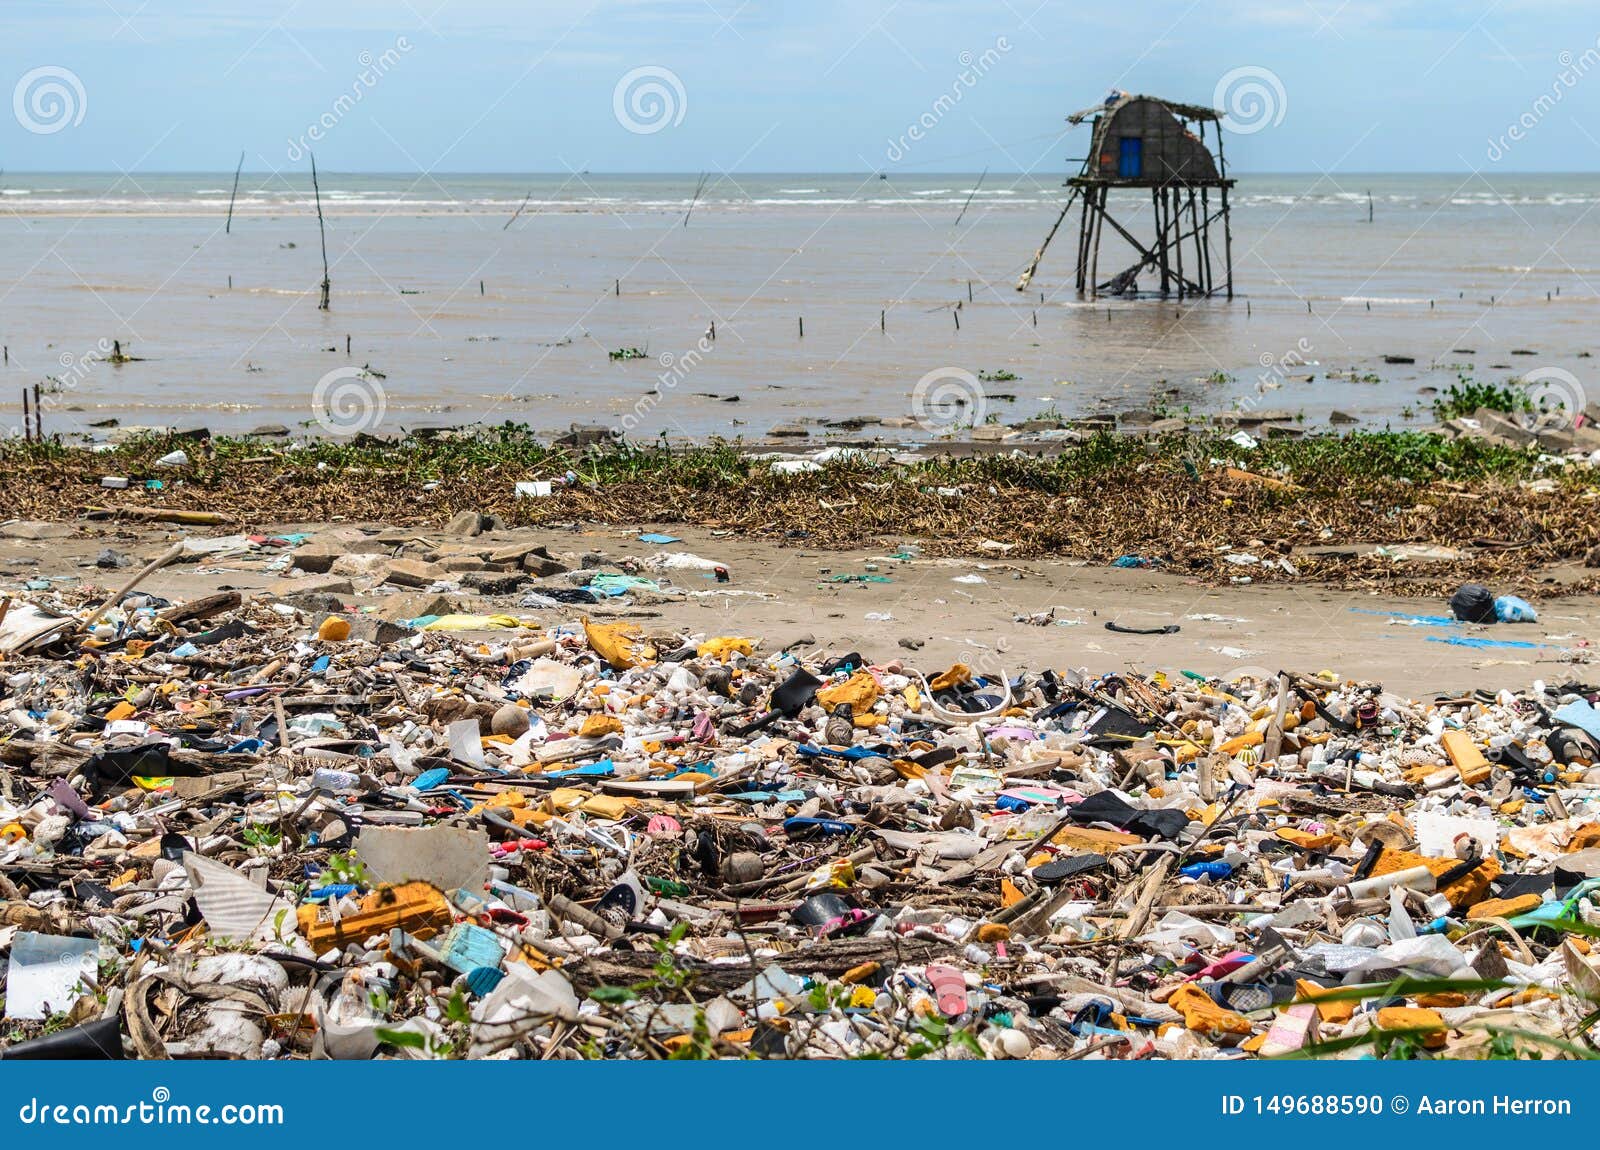 vietnamese coastline covered in trash and garbage